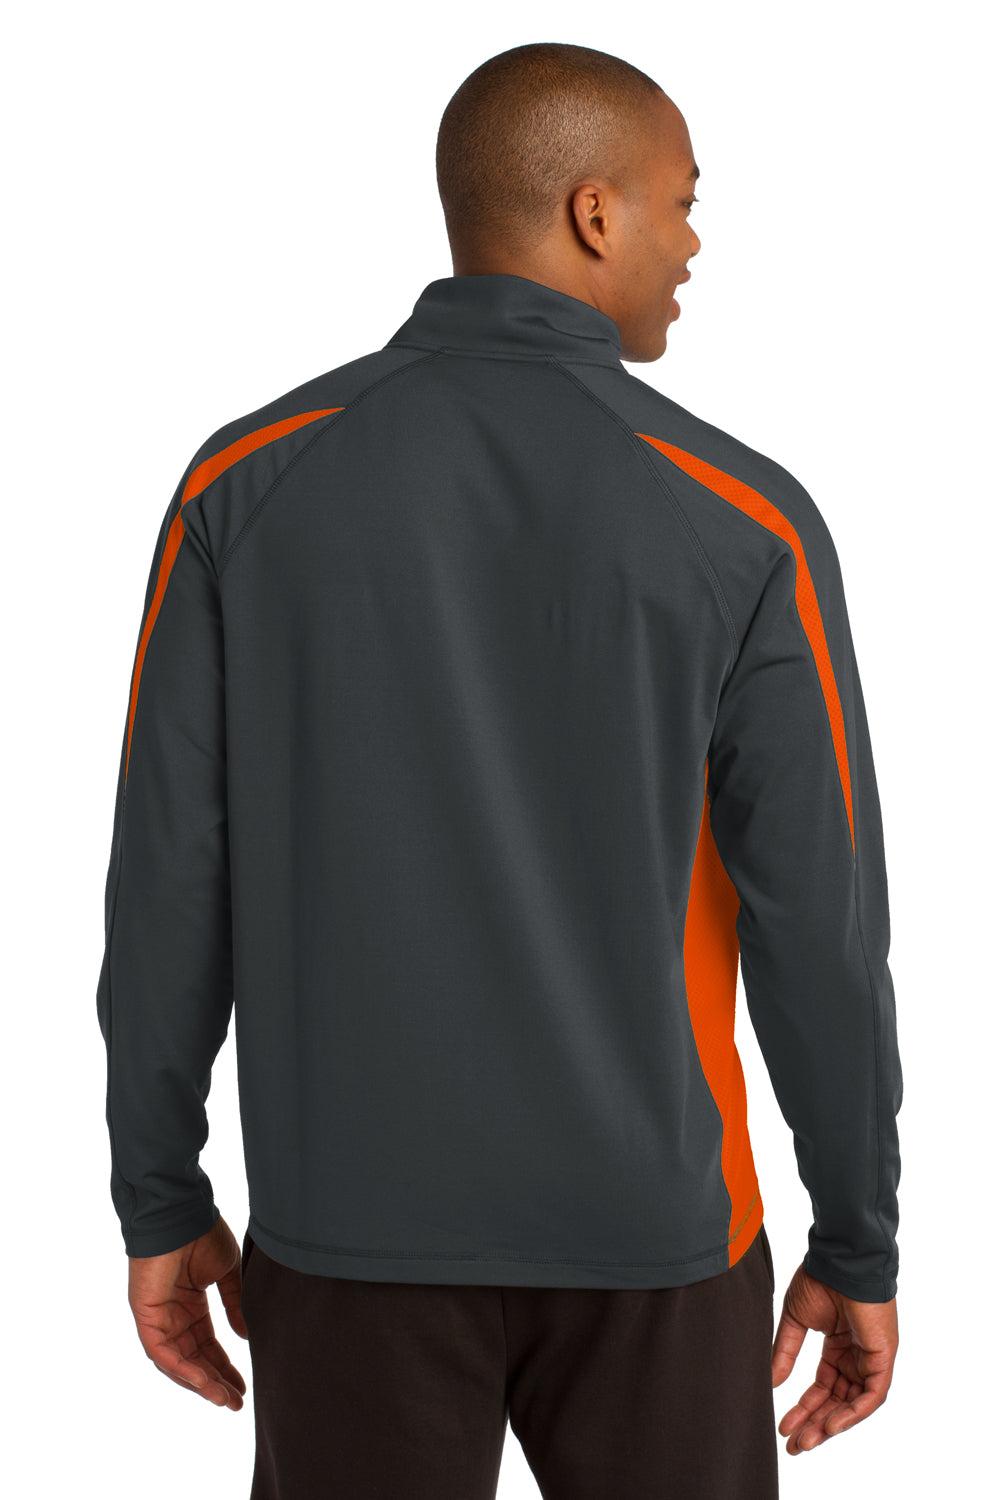 Sport-Tek ST851 Mens Sport-Wick Moisture Wicking 1/4 Zip Sweatshirt Charcoal Grey/Orange Back